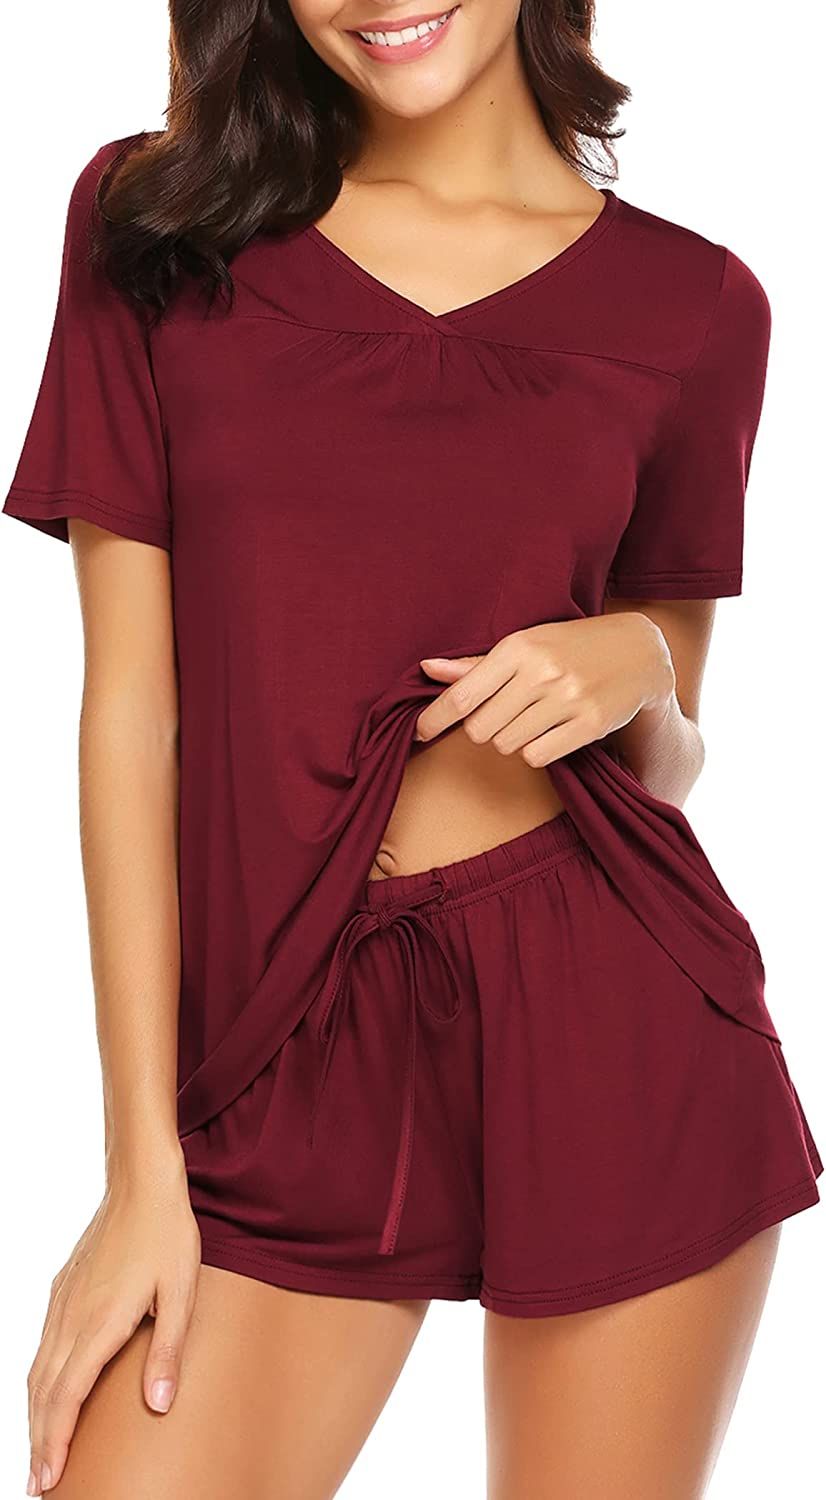 Avidlove Women's Shorts Pajama Set Short Sleeve Sleepwear Nightwear Pjs S-XXL       Add to Logie | Amazon (US)